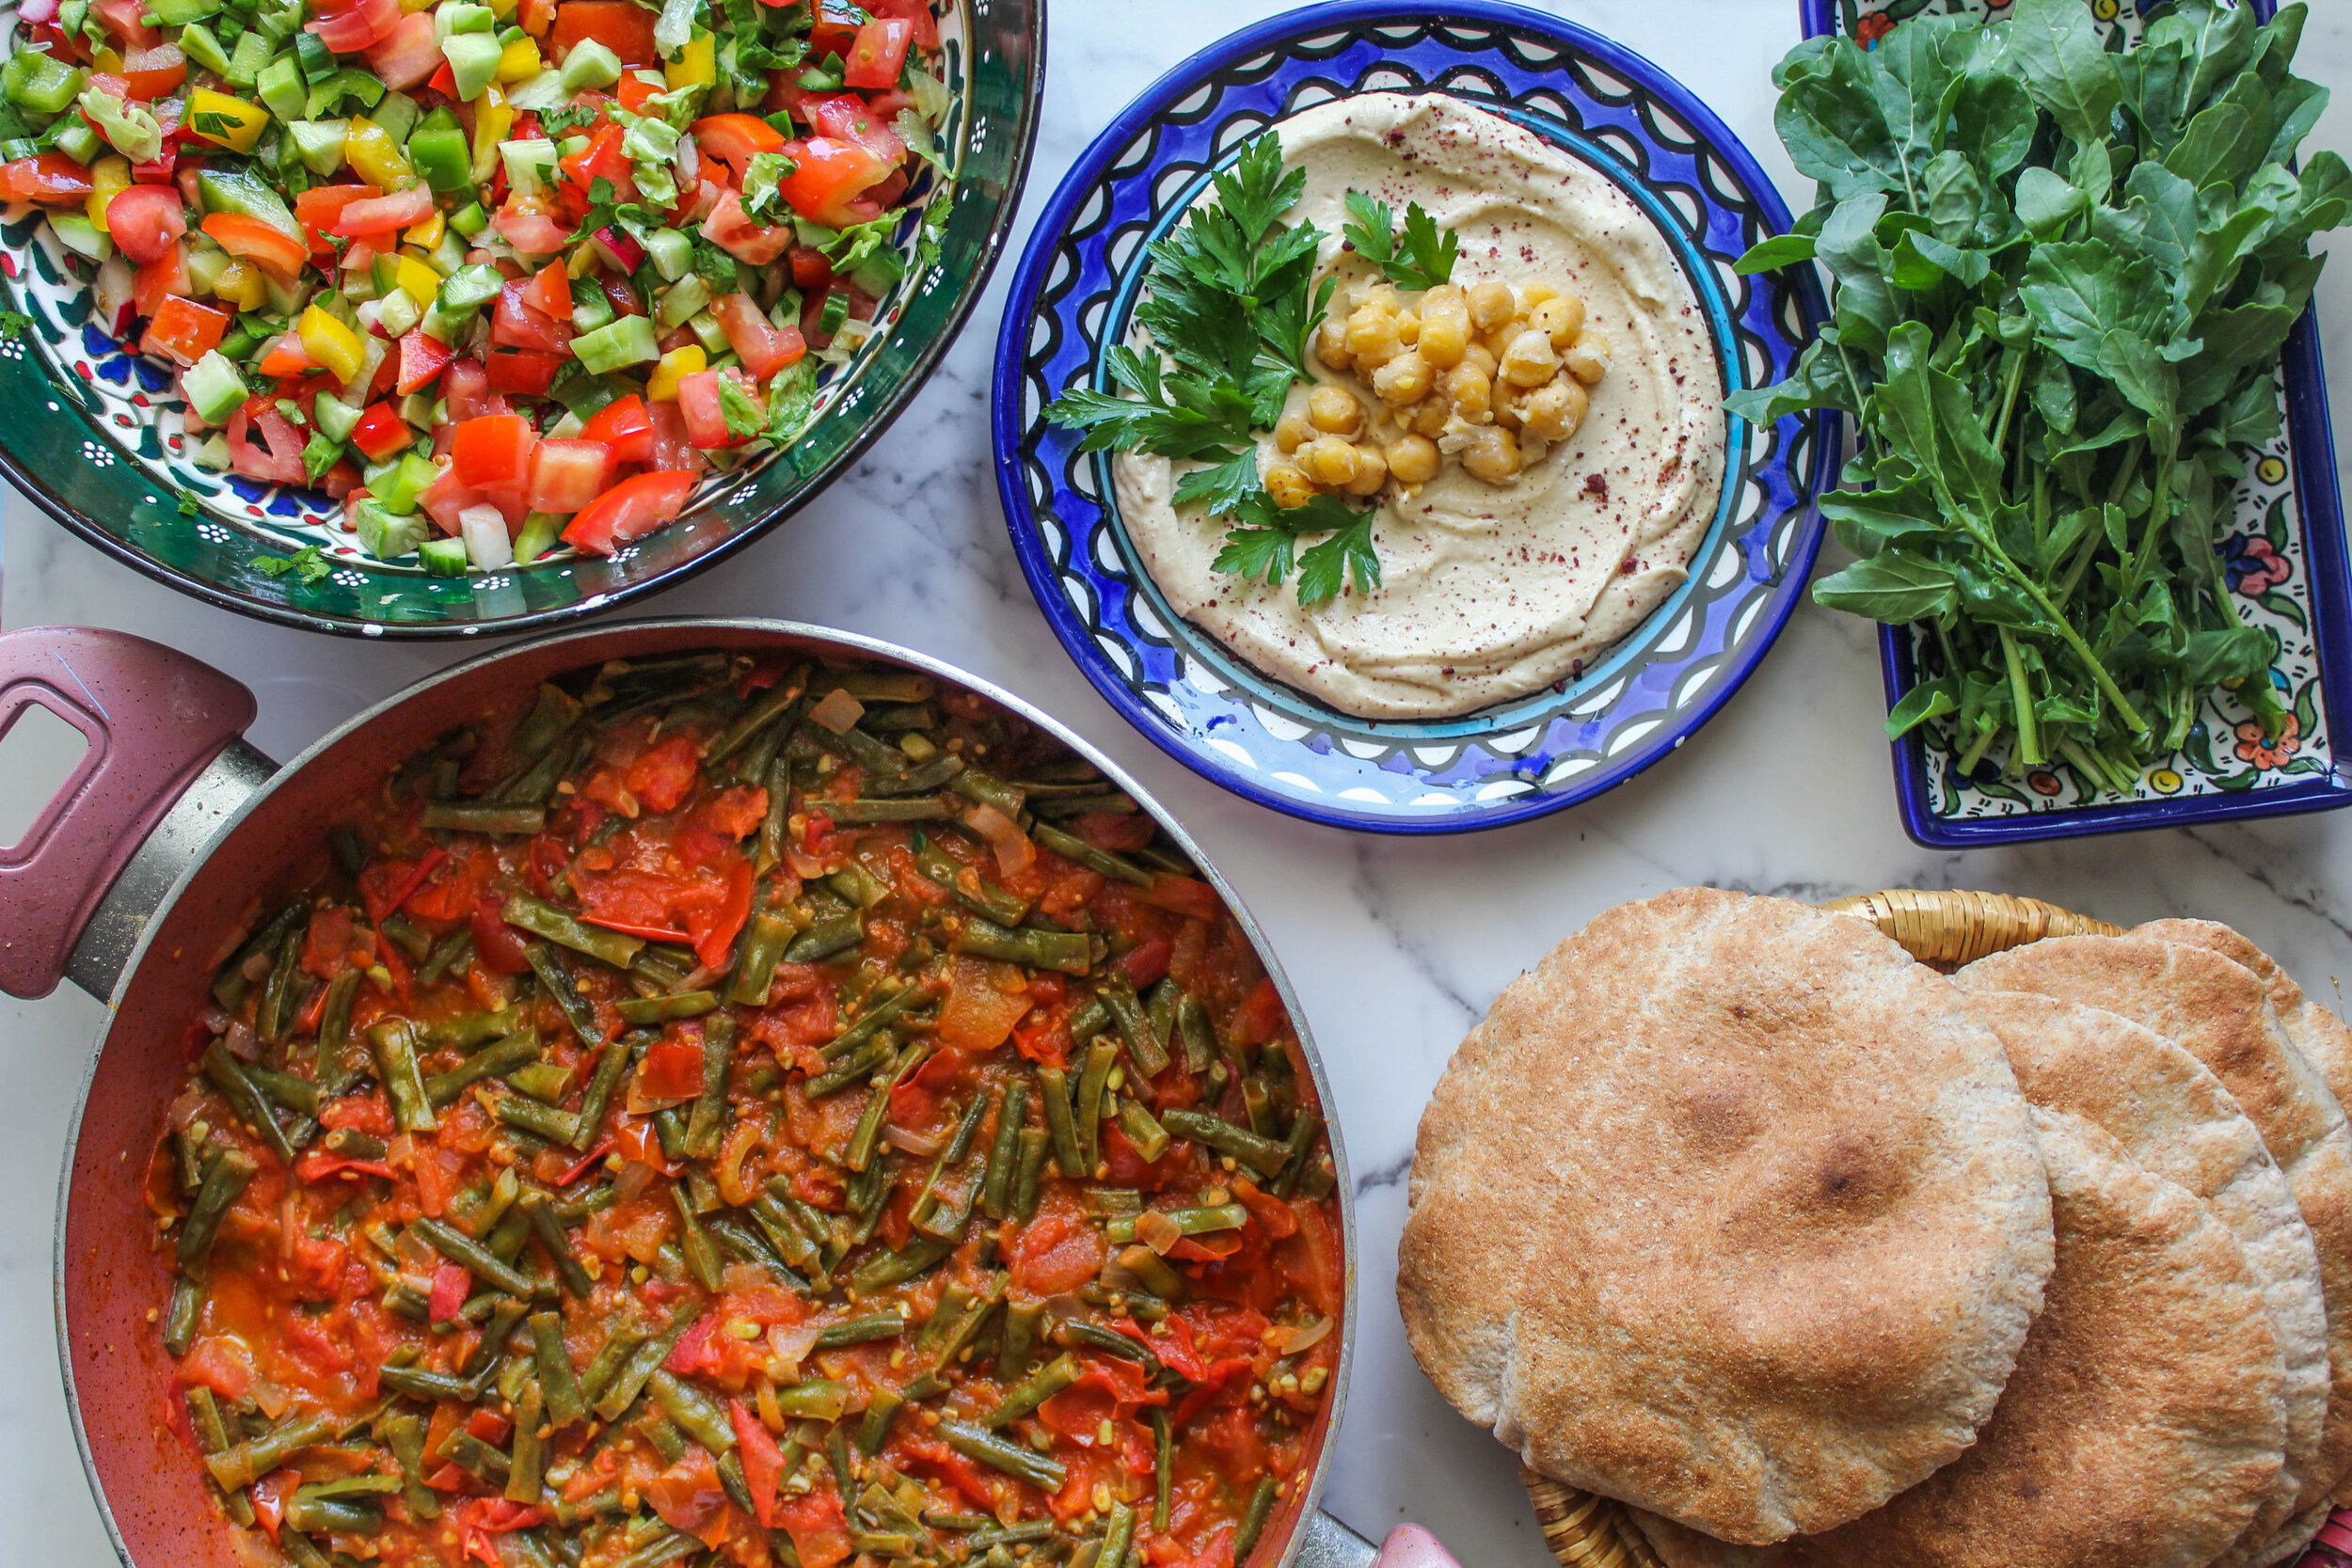  Green bean Allayeh, homemade hummus, whole wheat pita, falahi salad.  قلاية لوبيا بالبندورة، حمص بيتي، خبز كامل القمح، وسلطة فلاحية. 